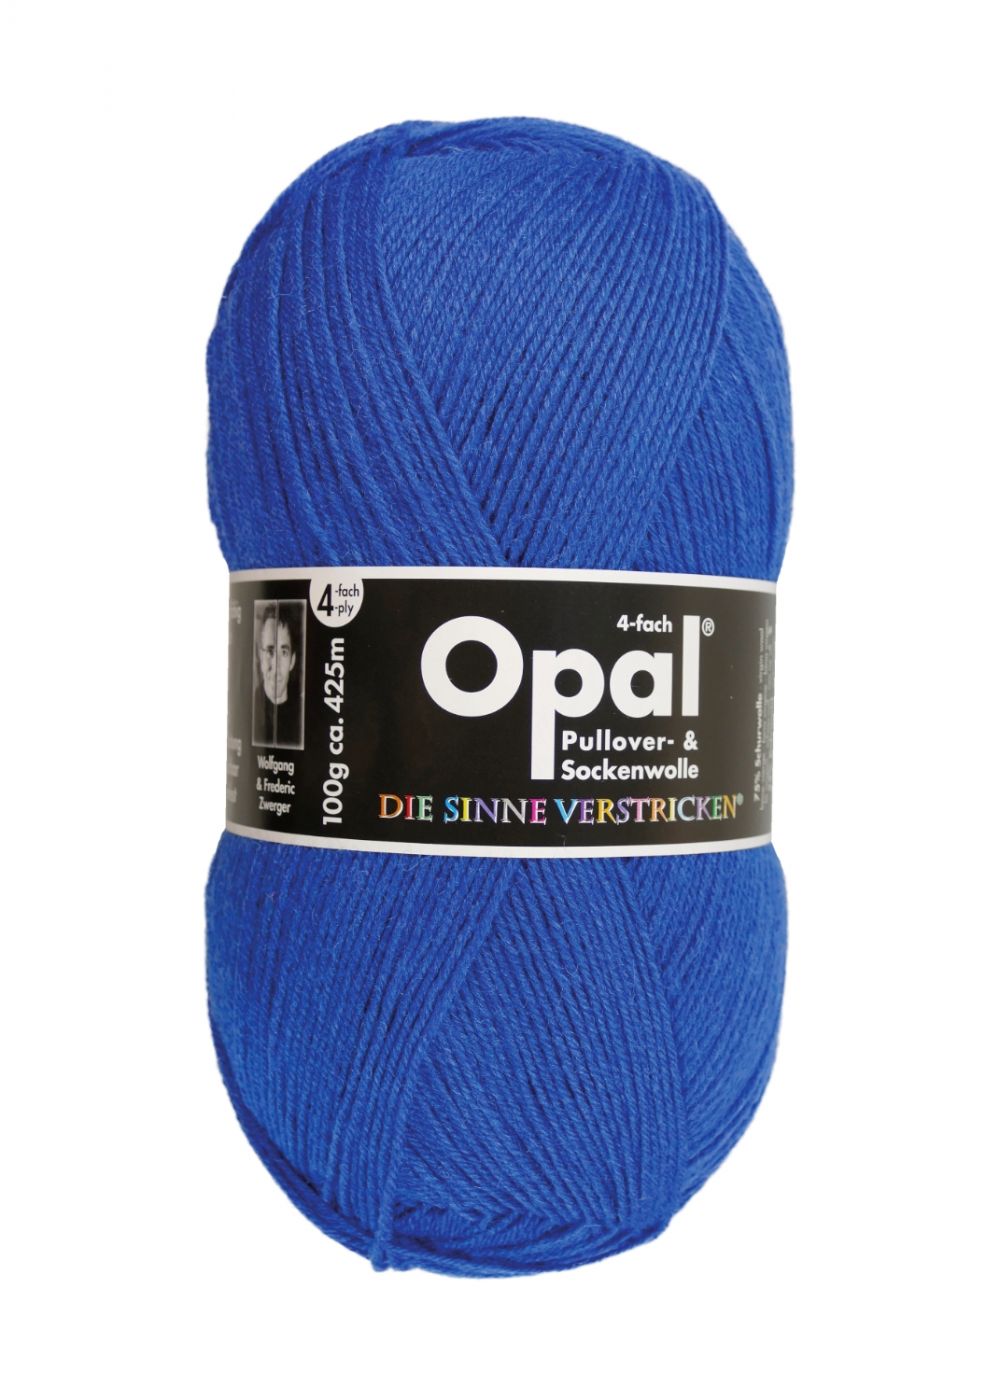 Opal Uni 4-fach 5188 синий